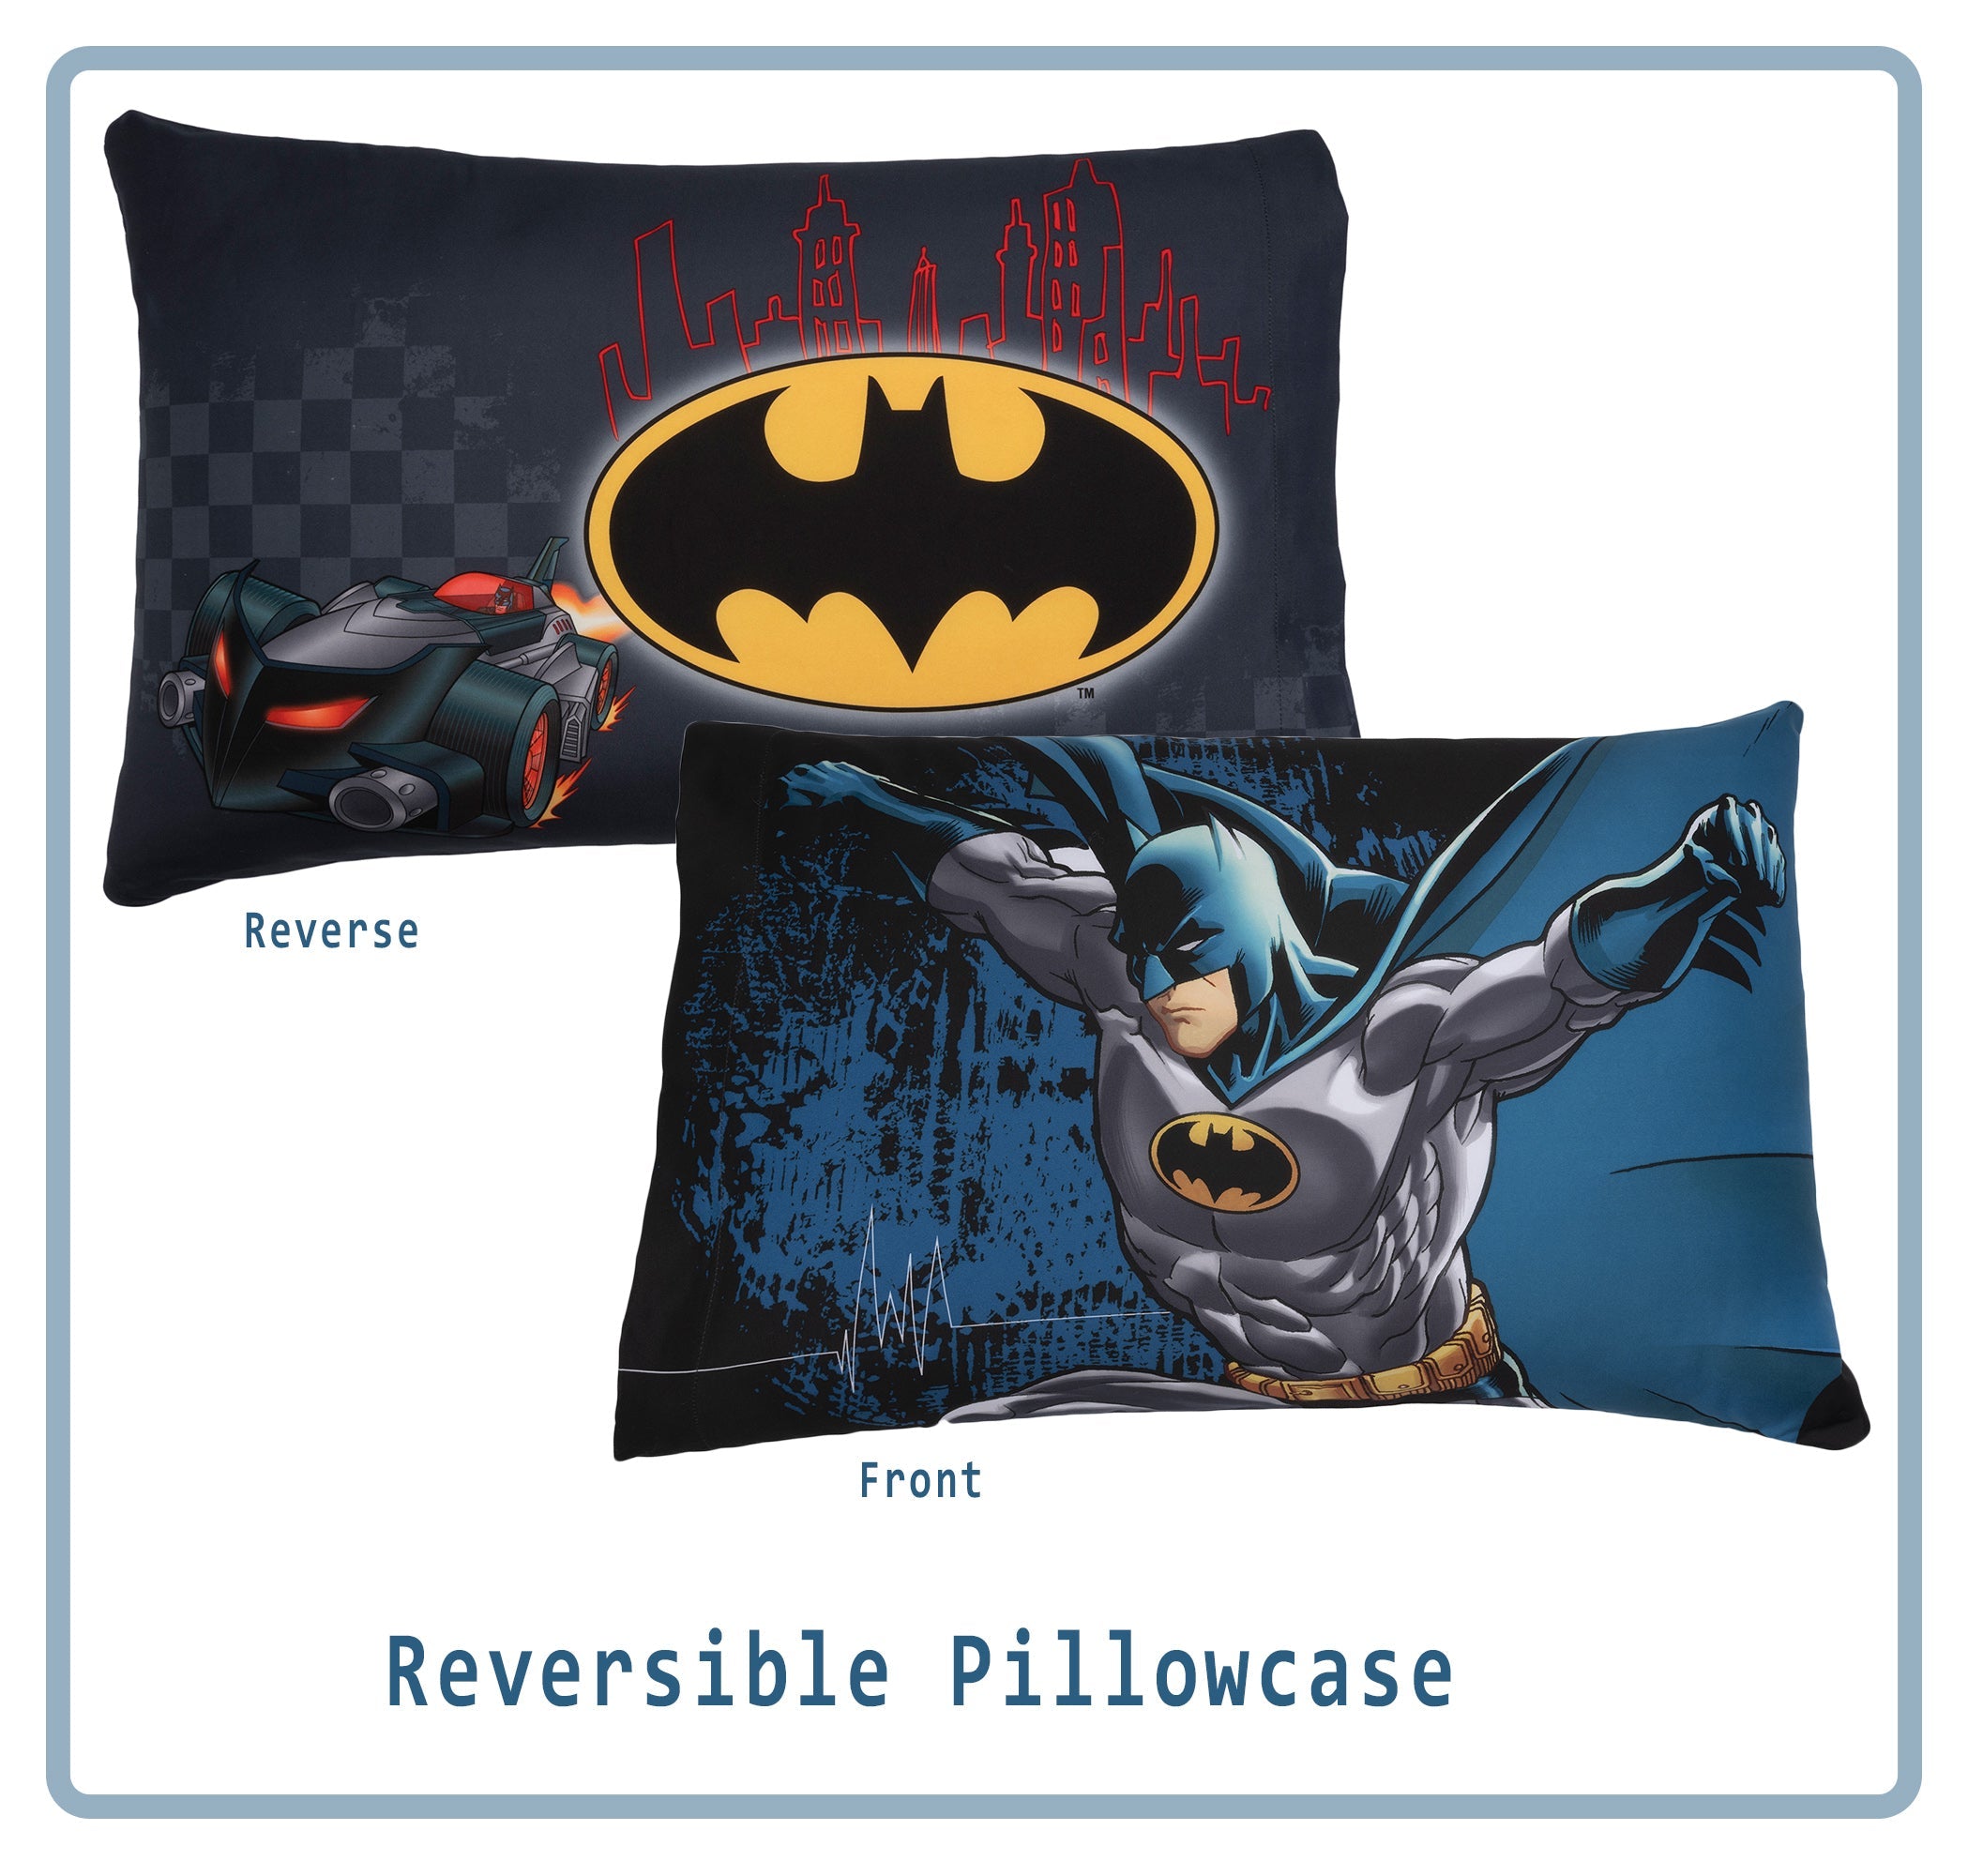 Batman Kids Twin Bed in a Bag, Comforter and Sheets, Gray, Warner Bros